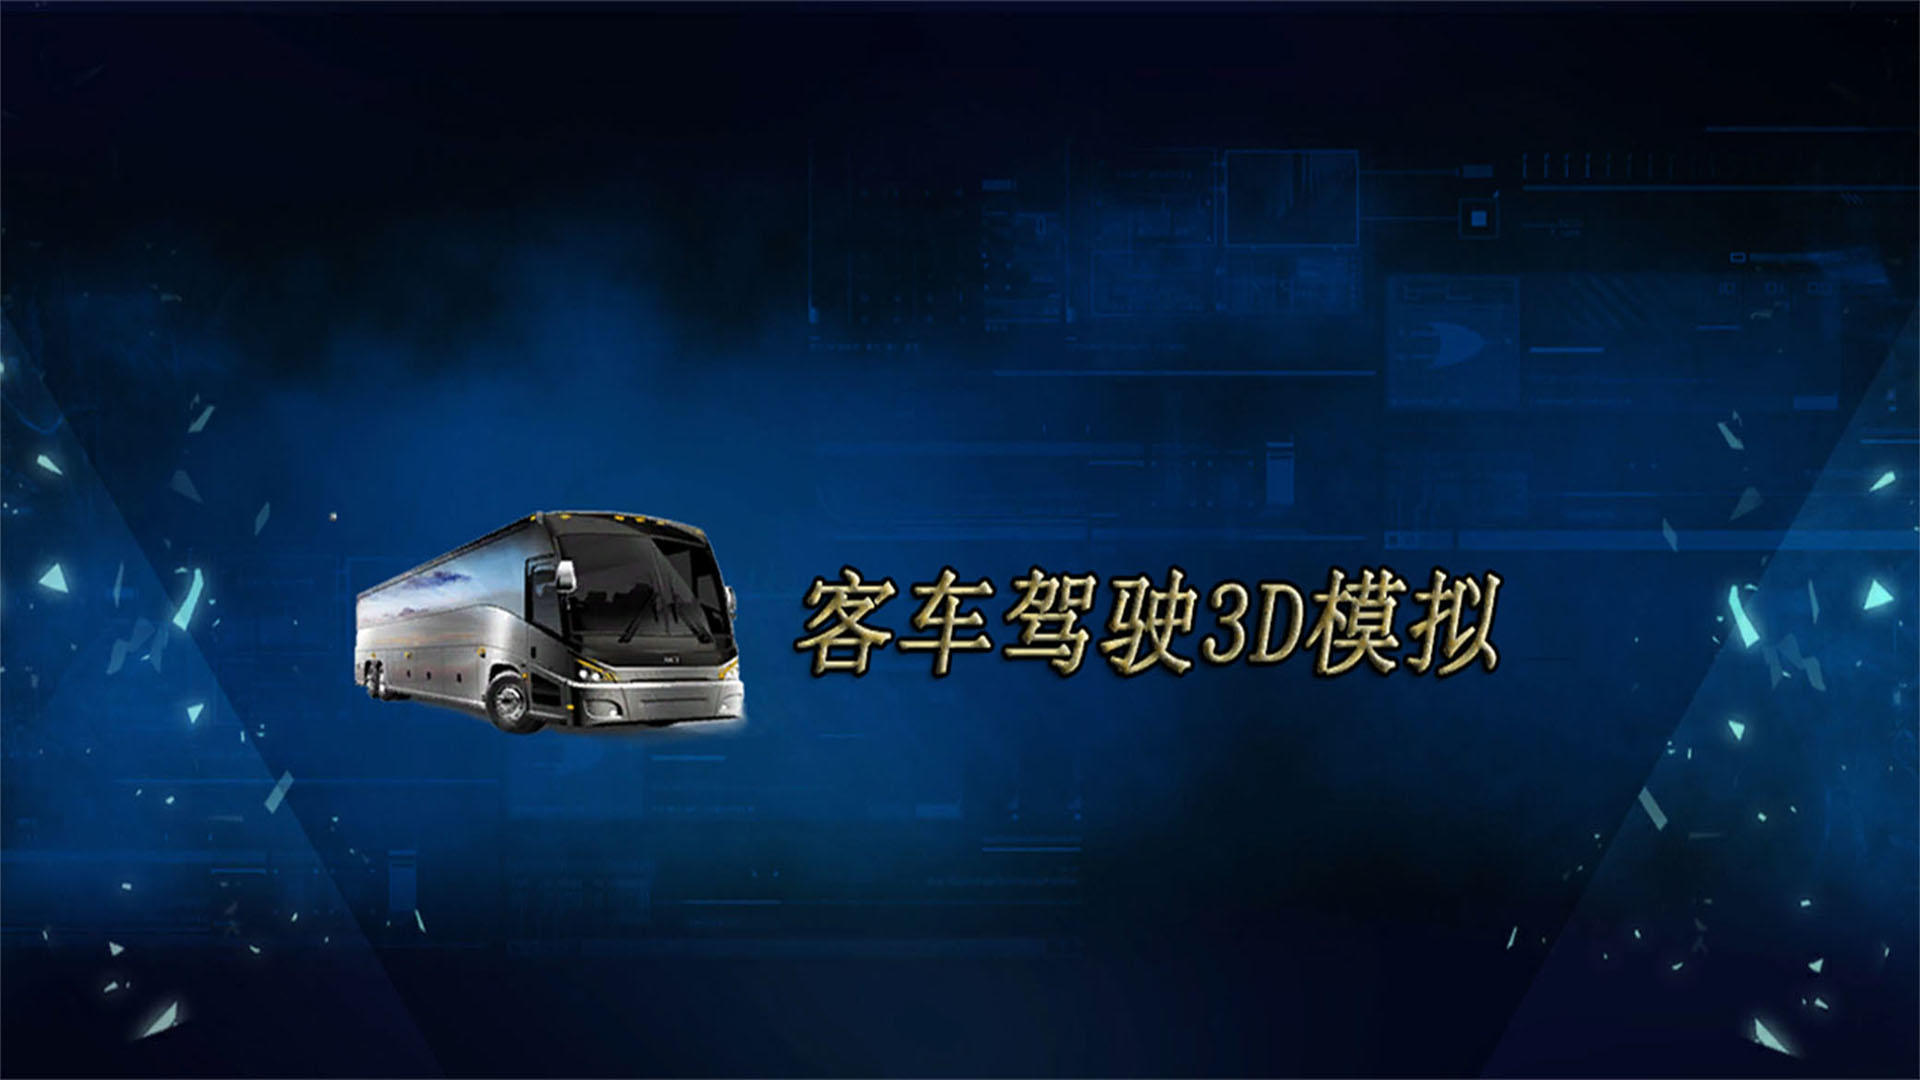 Banner of 3D-Simulation des Busfahrens 1.0